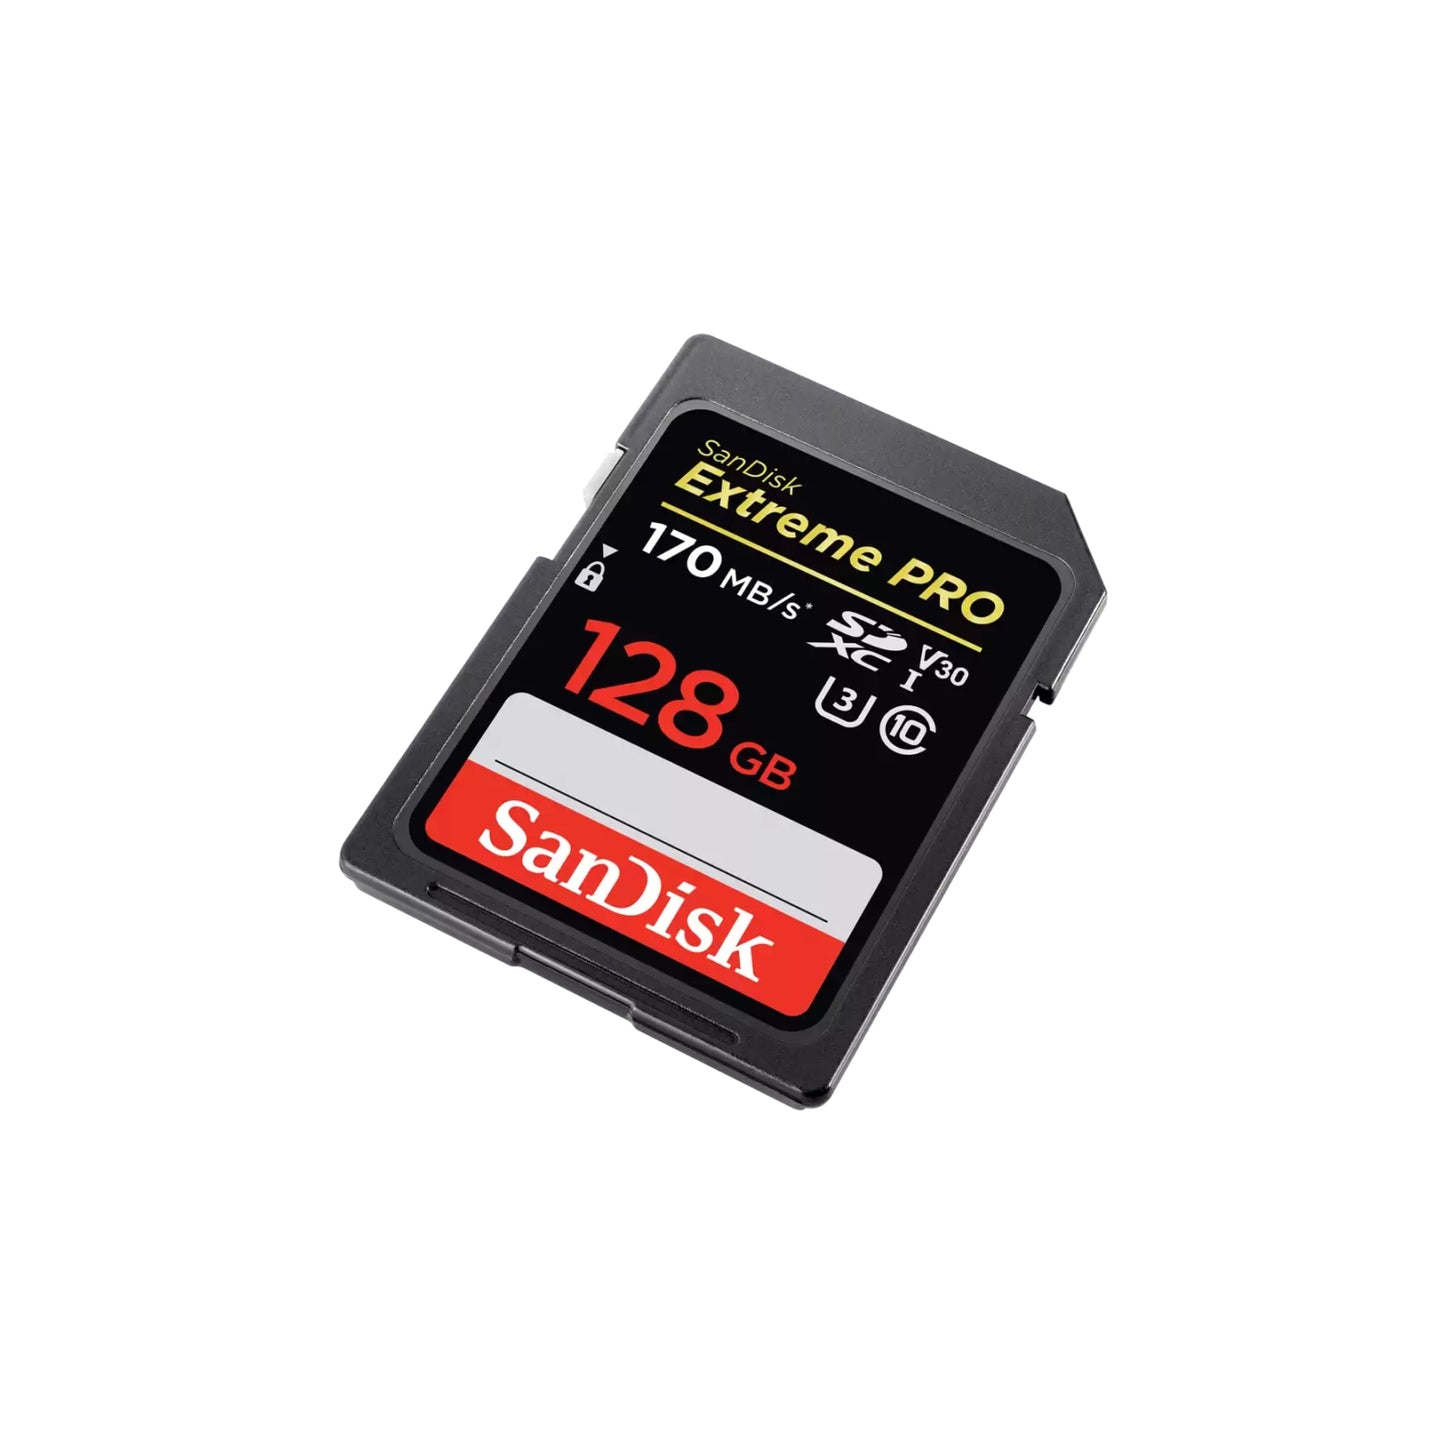 SanDisk Extreme Pro 128GB SDXC 170MB/S SD Camera Memory TF Card DSLR 4K UHD